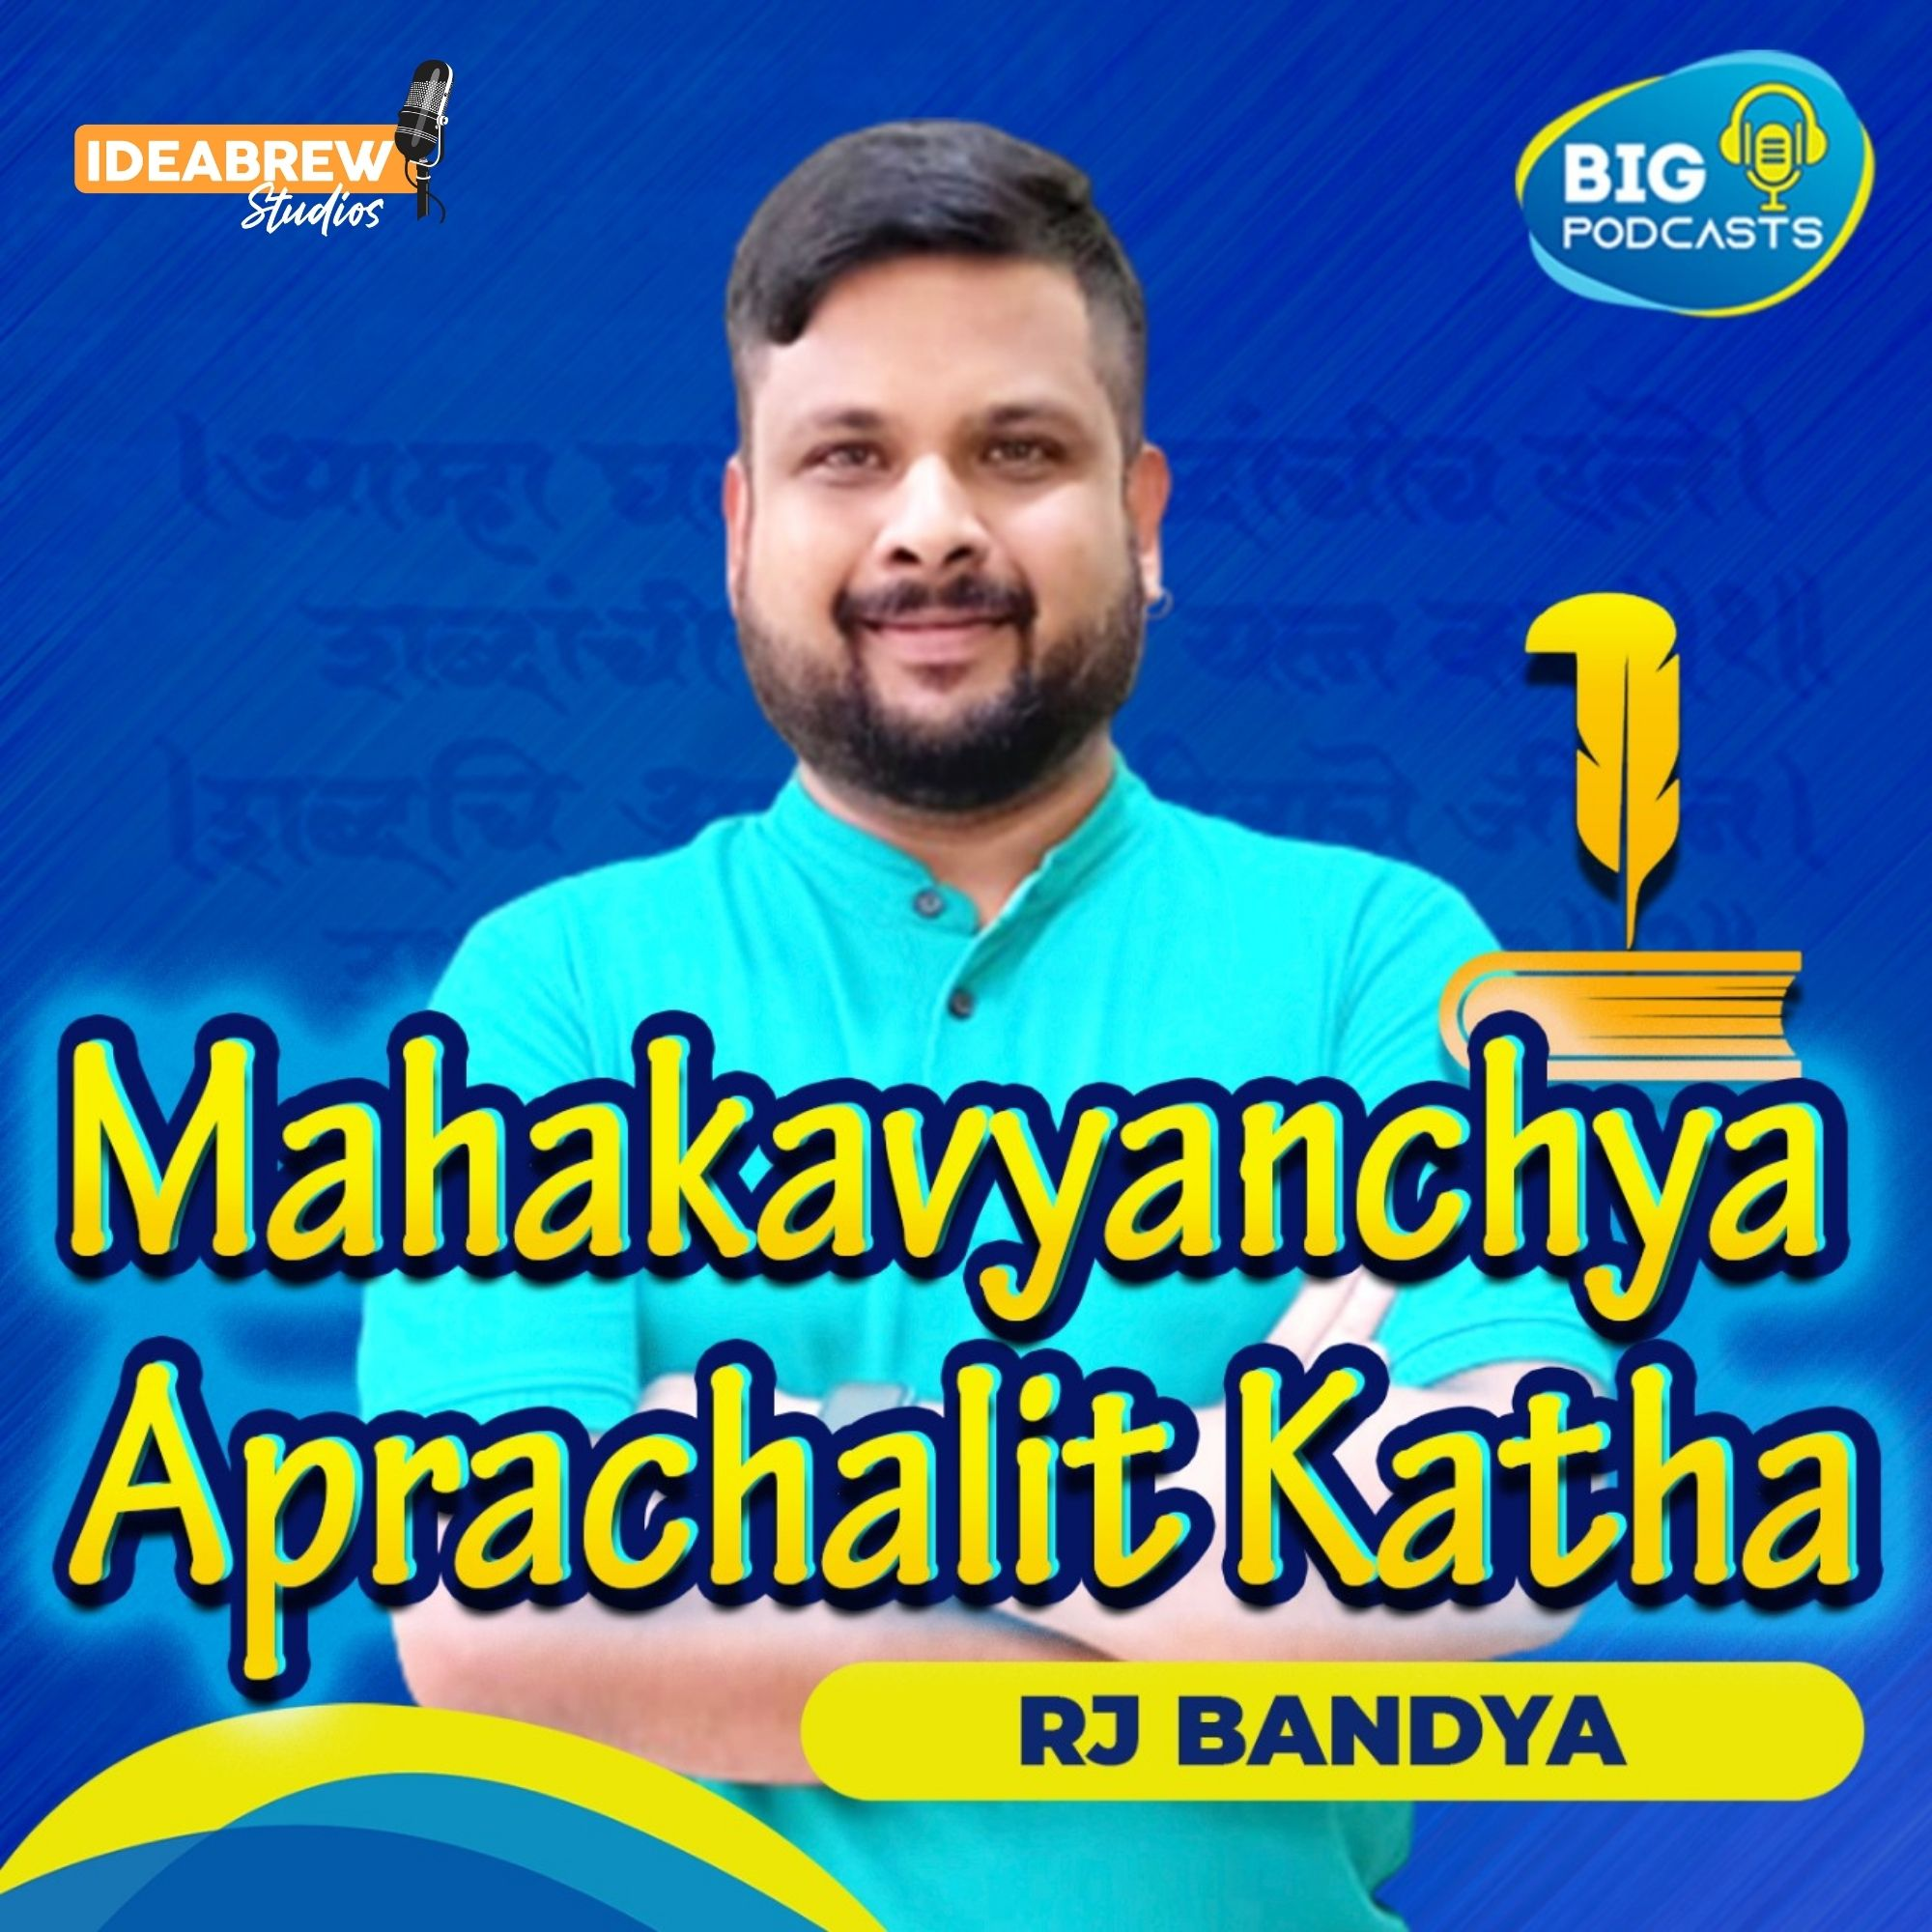 Mahakavyanche Aprachilit Katha | Eka Bhaarith Shaap